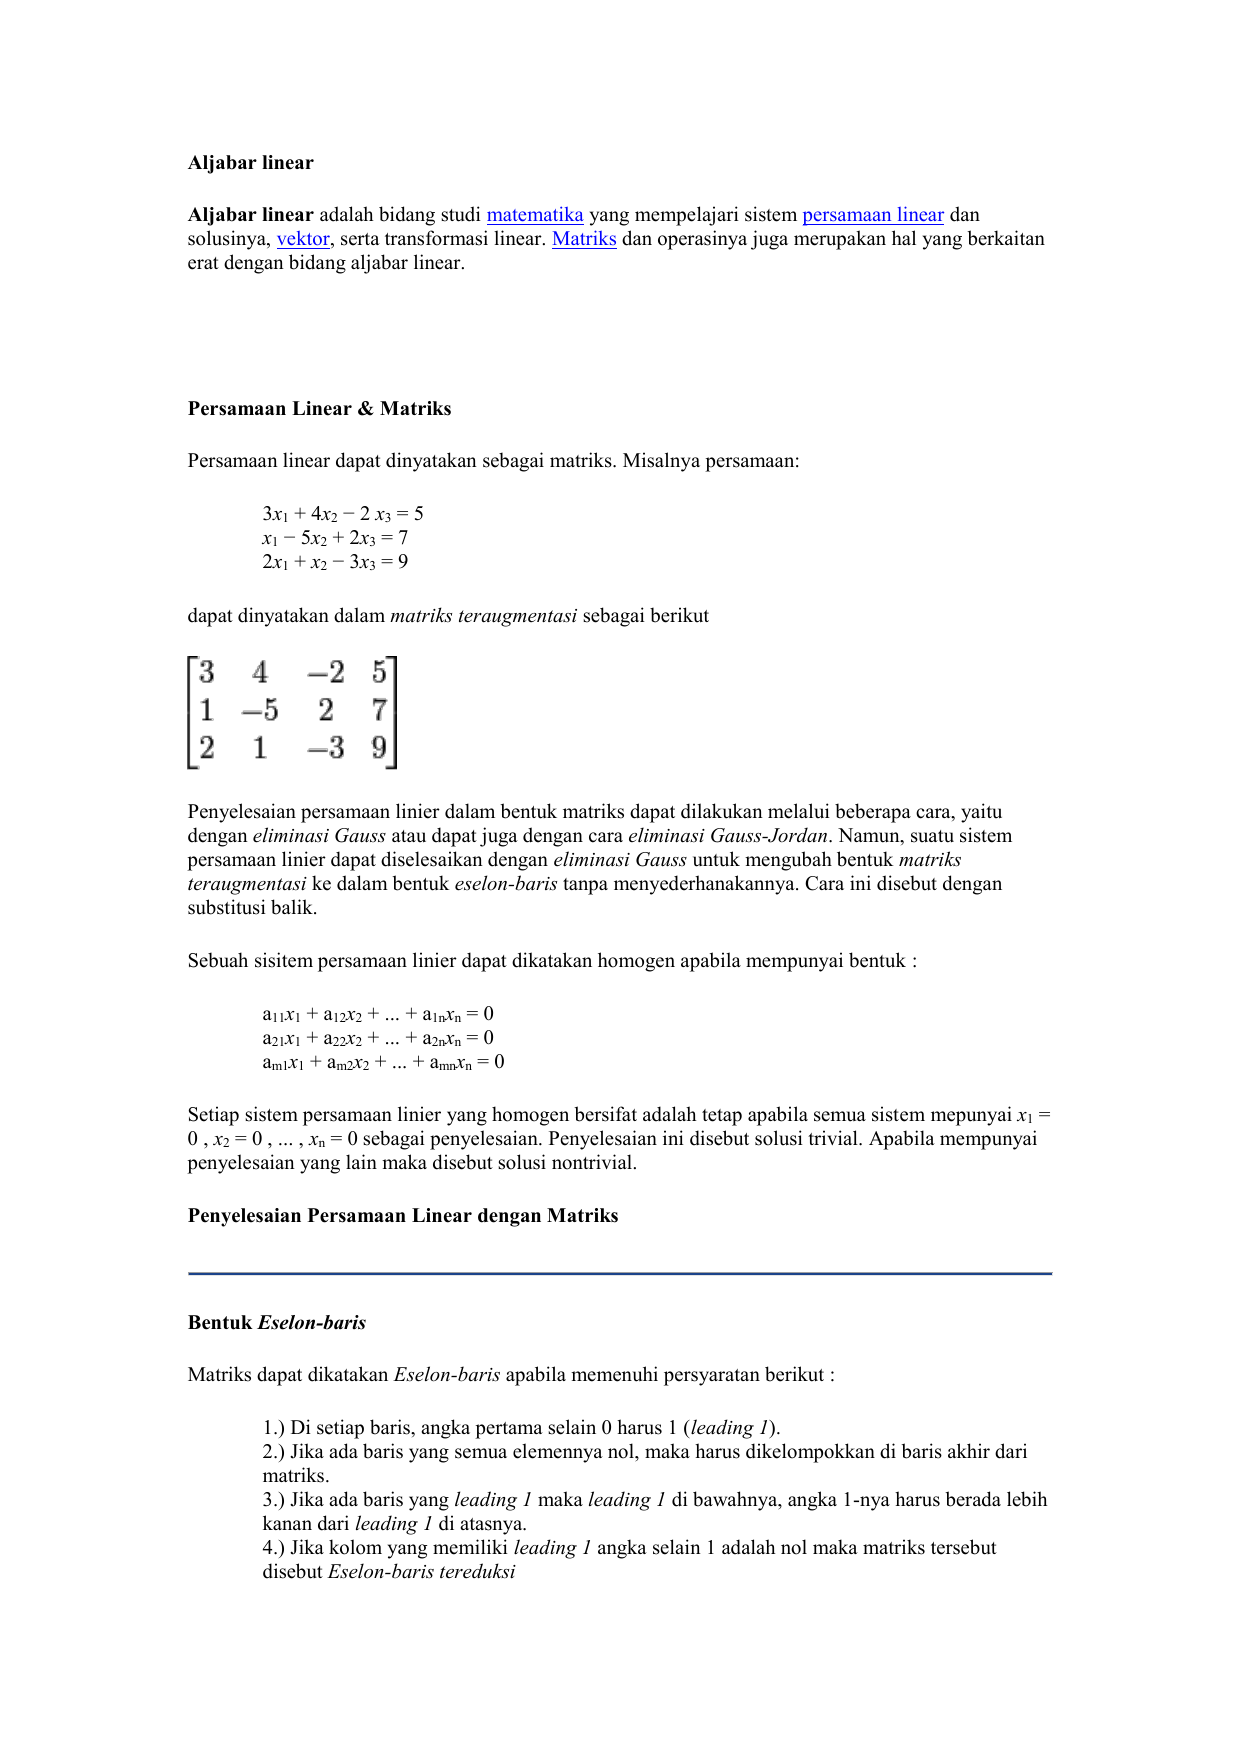 Kumpulan Contoh Soal: Contoh Soal Determinan Matriks 2x3